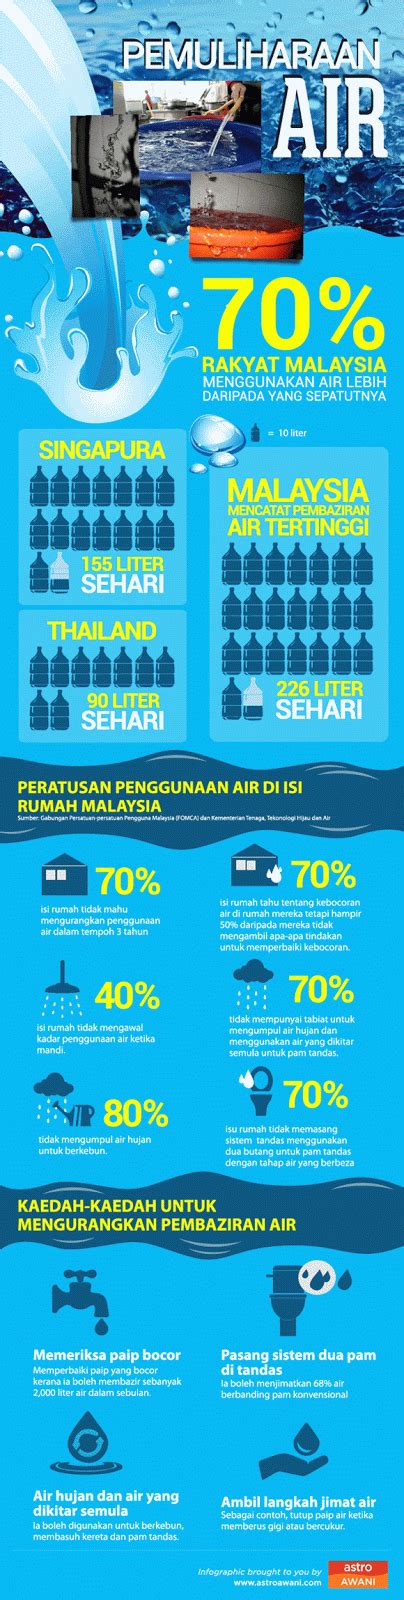 Apakah punca krisis air di malaysia?? Fenomena El-Nino 2014 Kesan Perubahan Iklim Dunia | DUNIA AKU